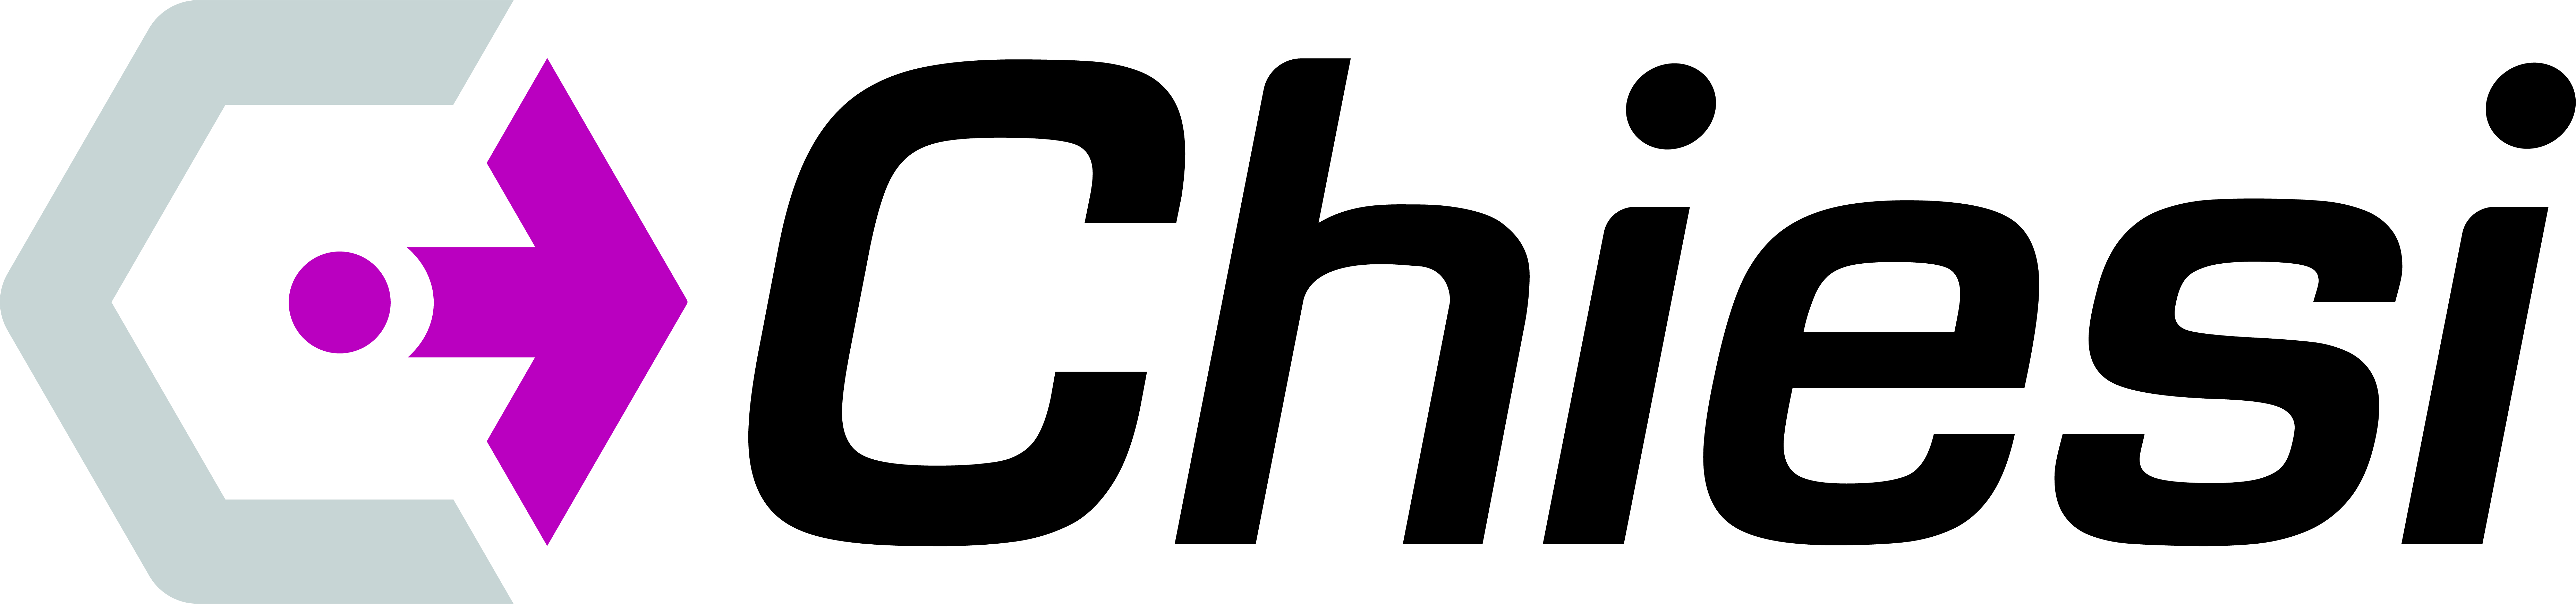 Chiesi Logo - 1.Primary (2) (1).jpg